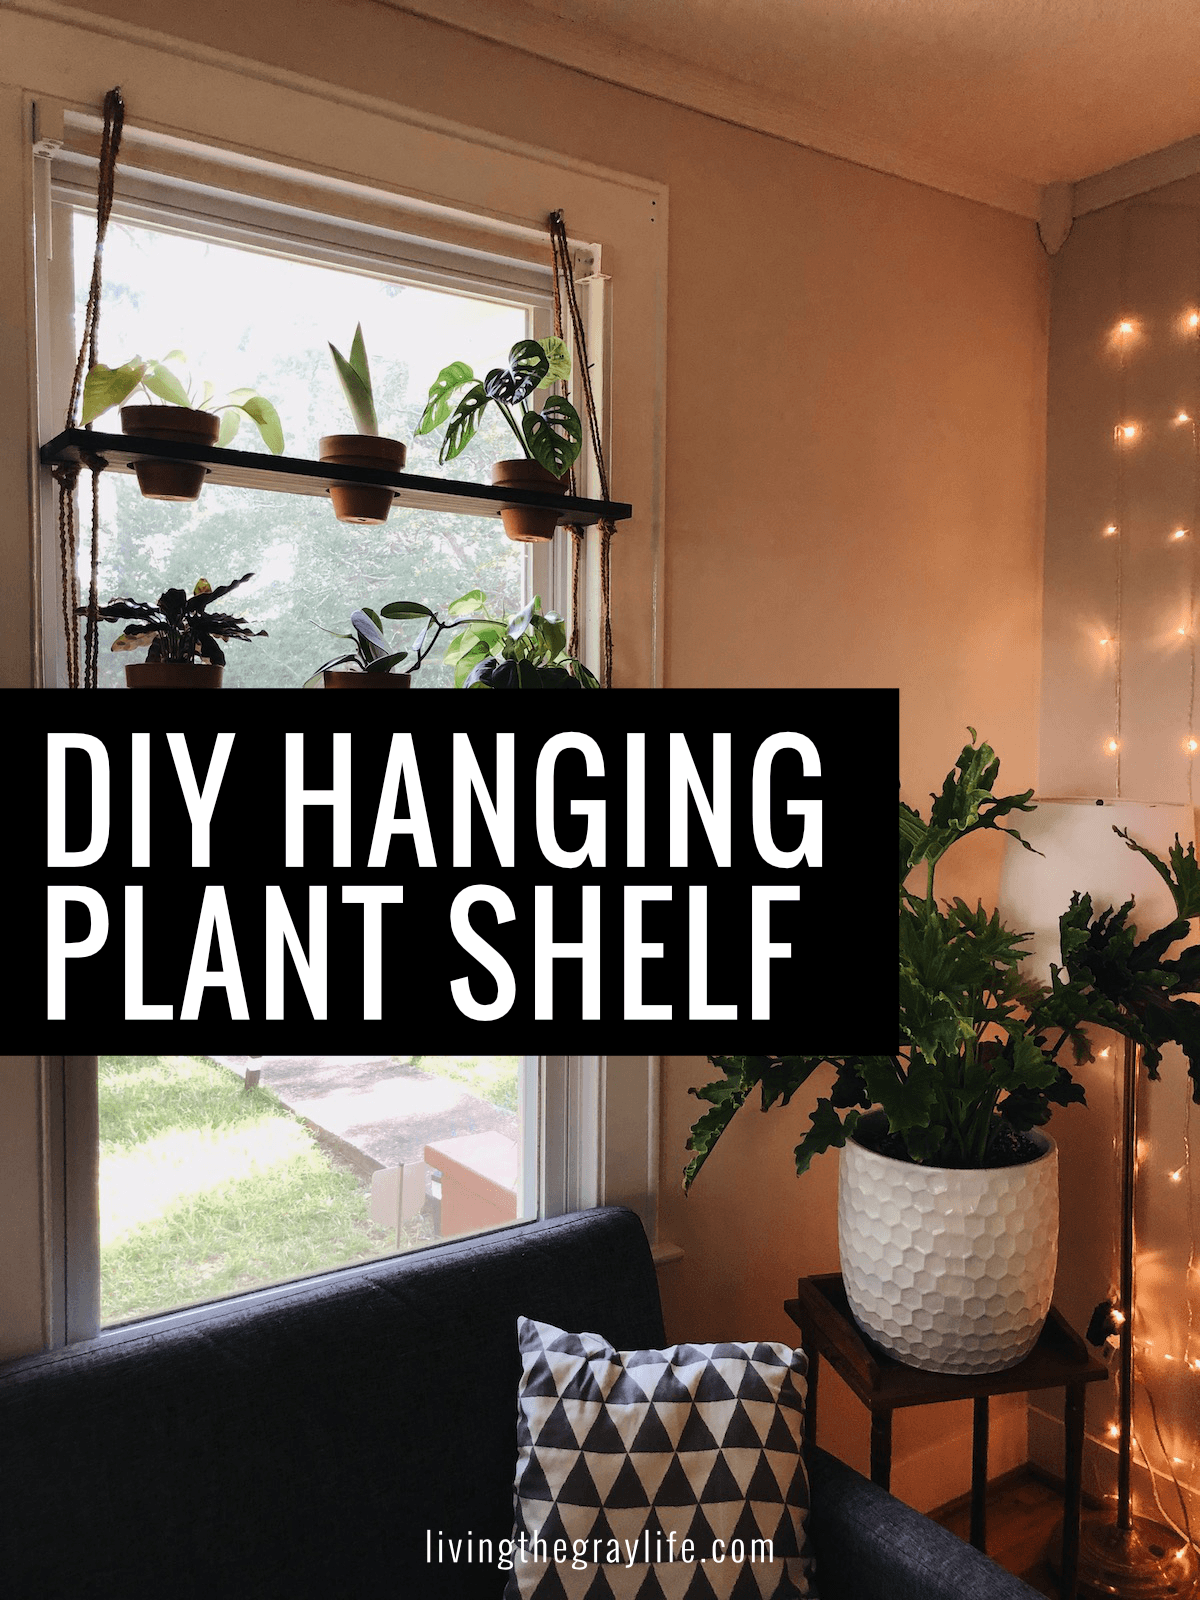 Diy Hanging Plant Shelf Blog Cover